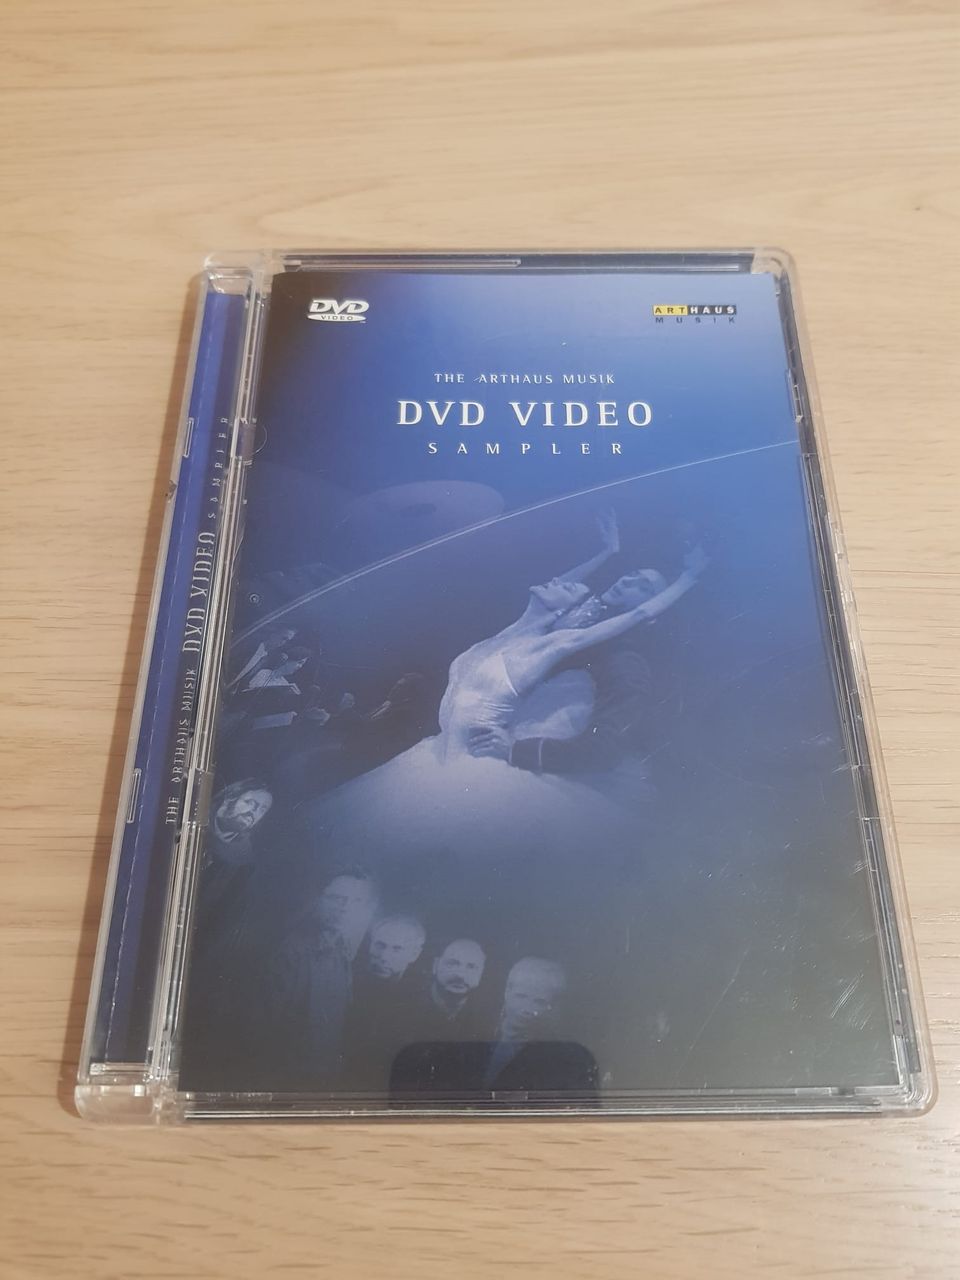 The Arthaus Musik DVD video sampler -DVD